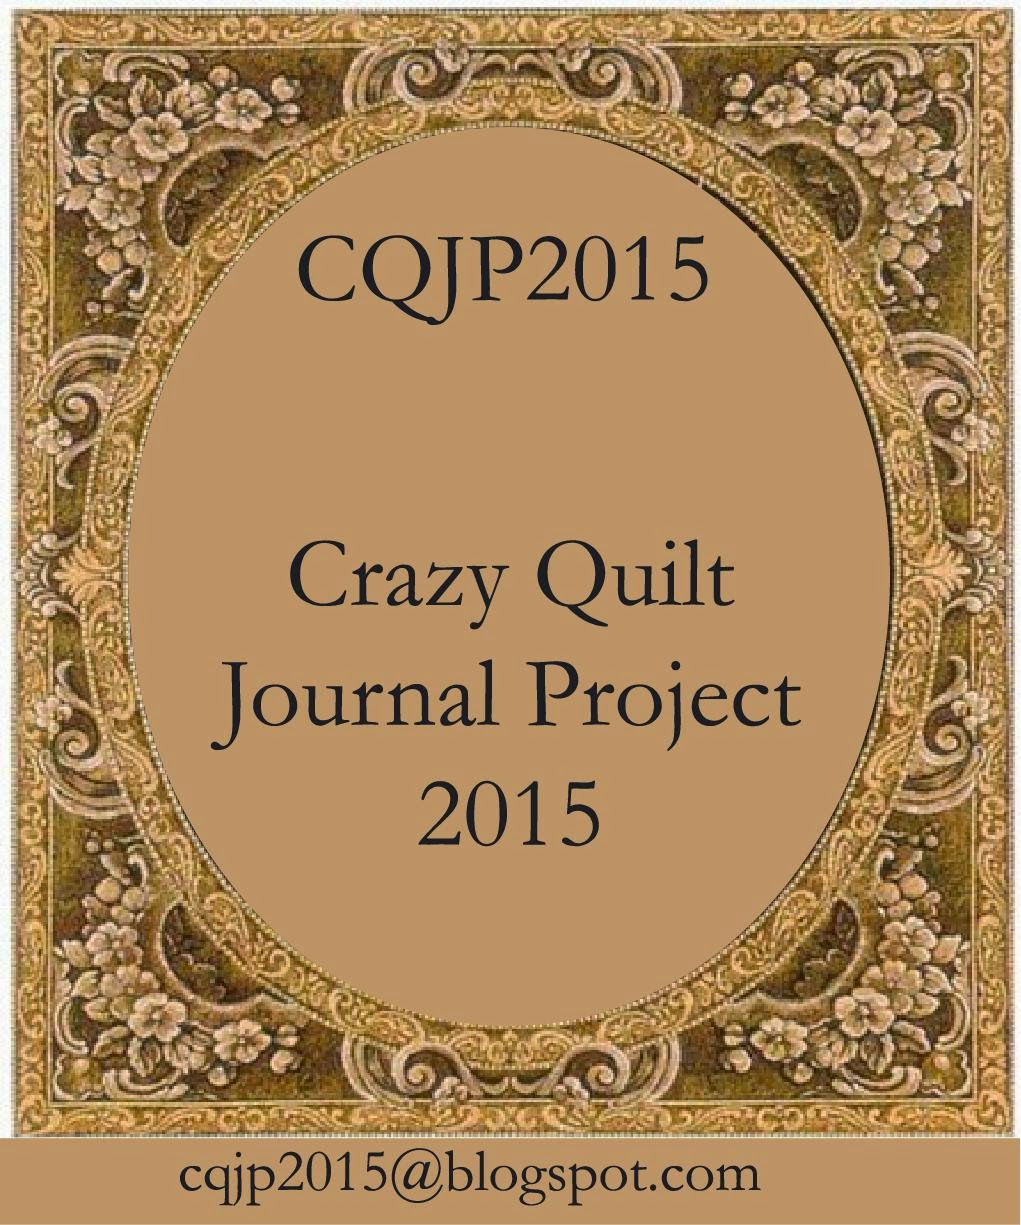 CQJP2015